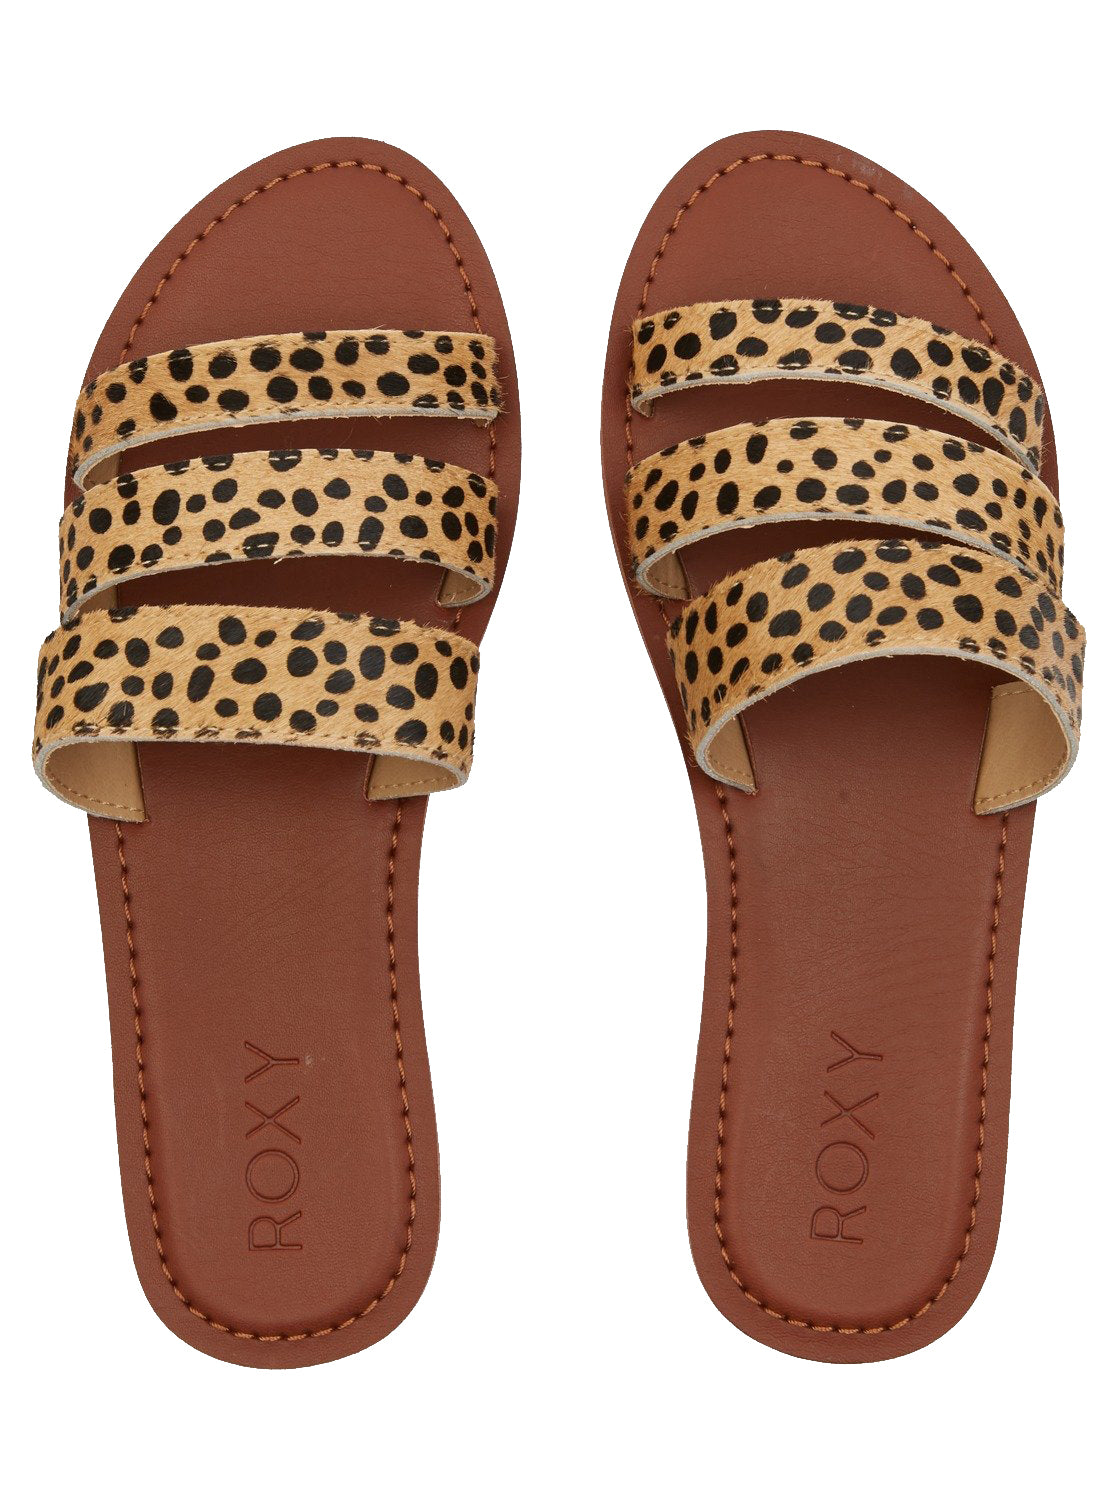 Roxy Wyld Rose 2 Womens Sandal CHE-Cheetah Print 9